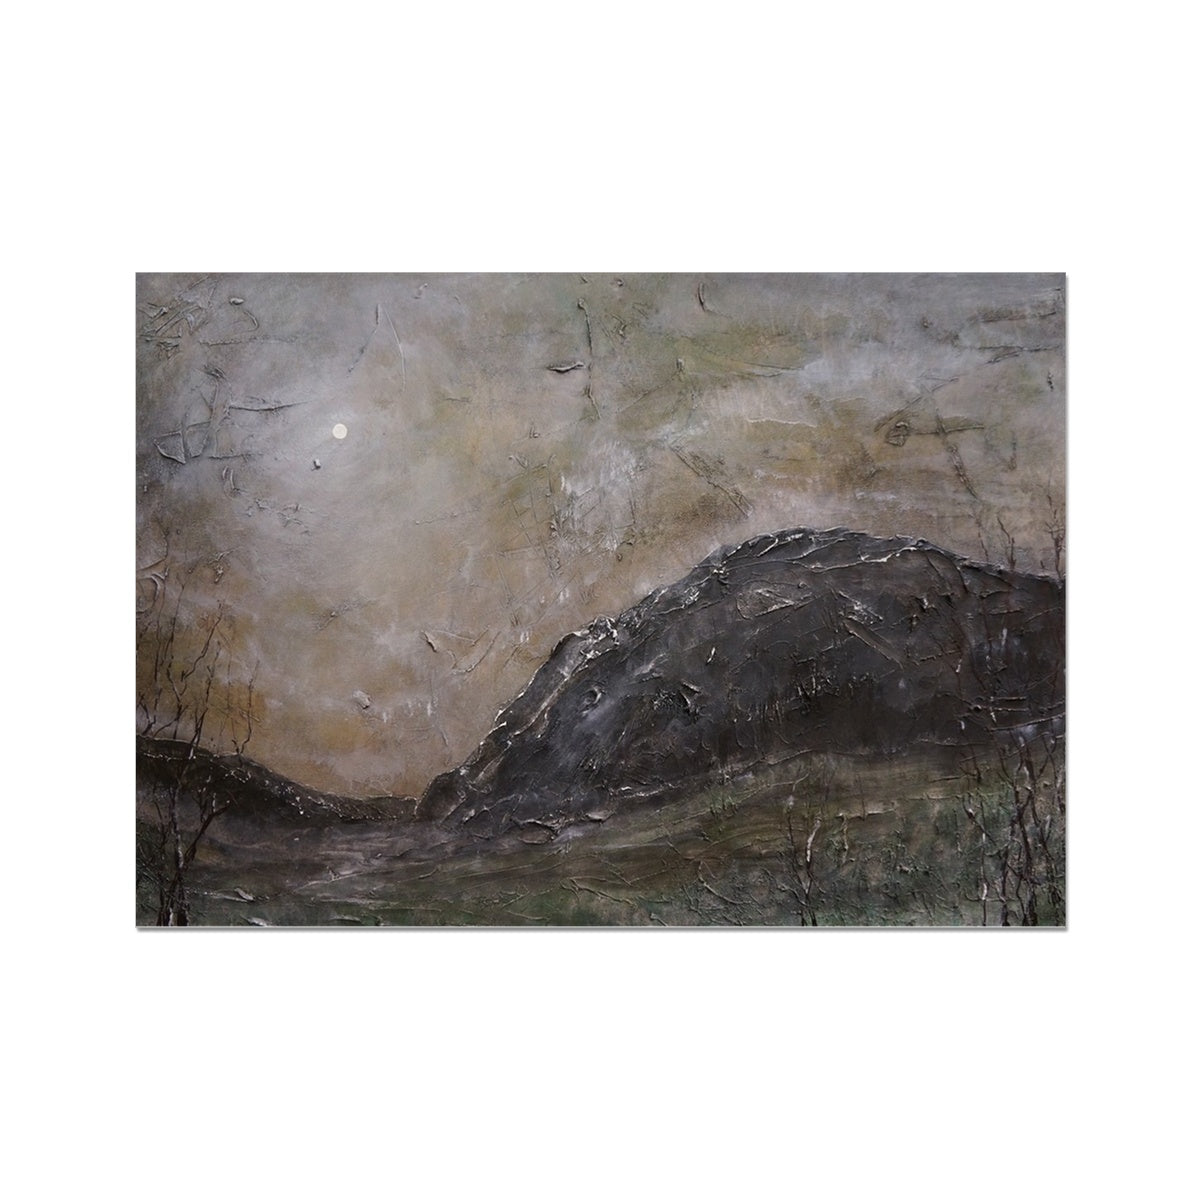 Glen Nevis Moonlight Painting | Fine Art Prints From Scotland-Unframed Prints-Scottish Lochs & Mountains Art Gallery-A2 Landscape-Paintings, Prints, Homeware, Art Gifts From Scotland By Scottish Artist Kevin Hunter